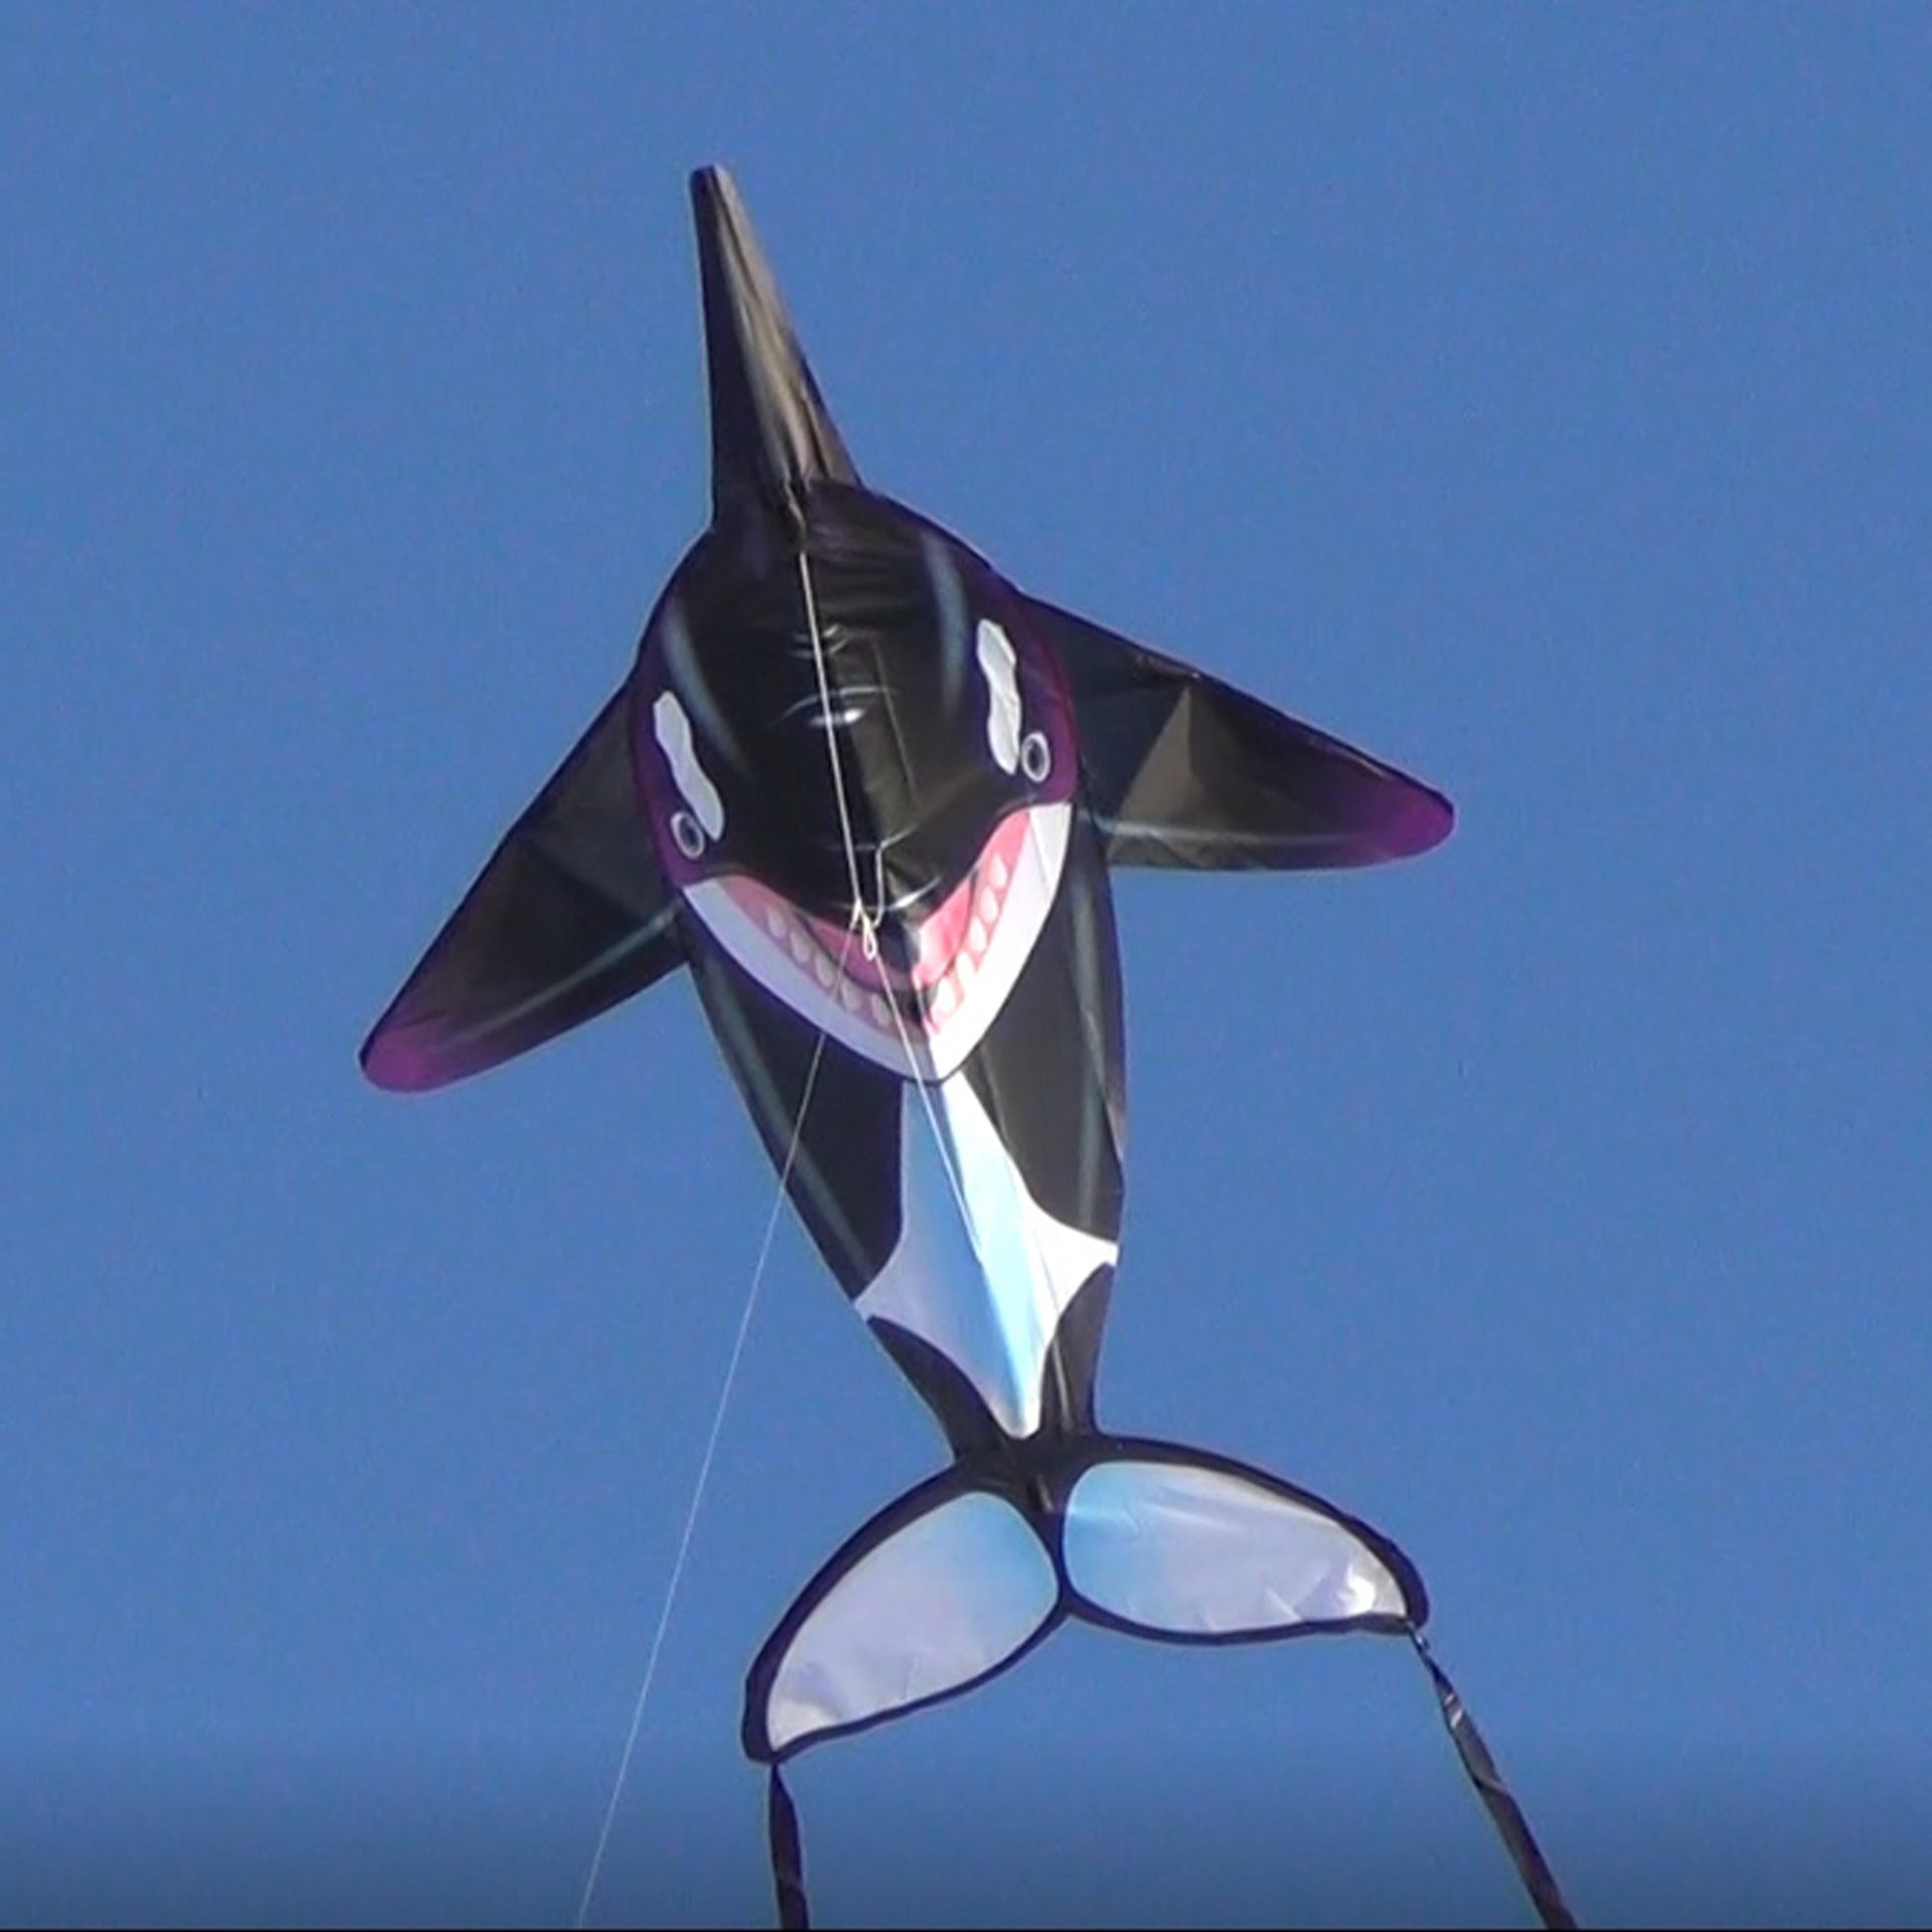 windnsun sealife orca nylon kite flying